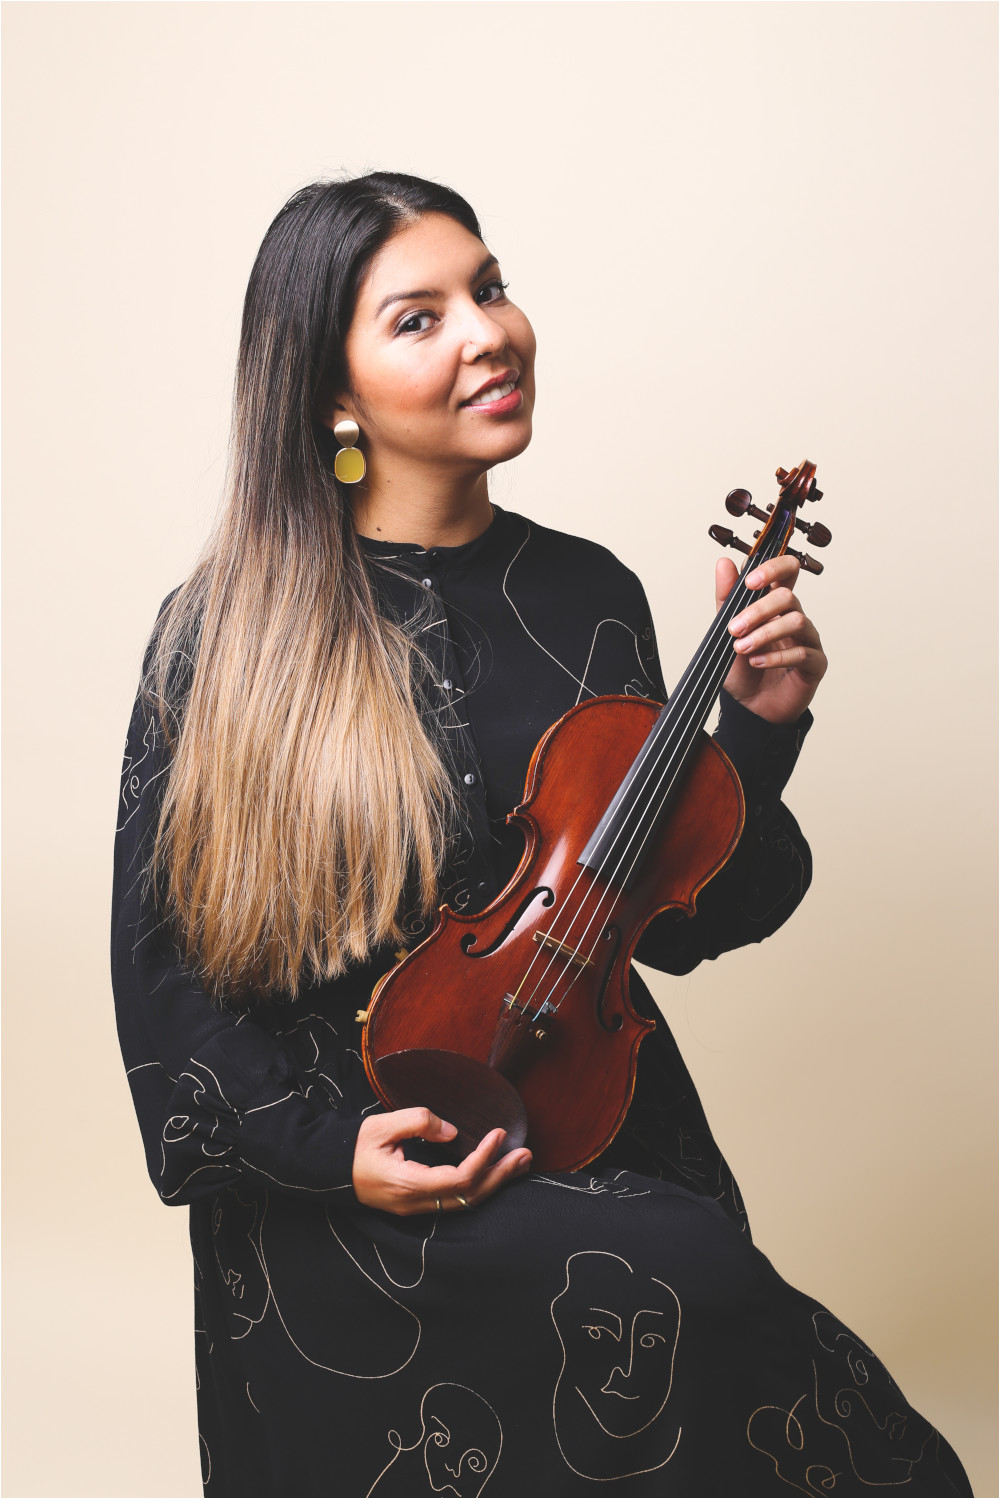 You are currently viewing Florencia Araujo (Violin)